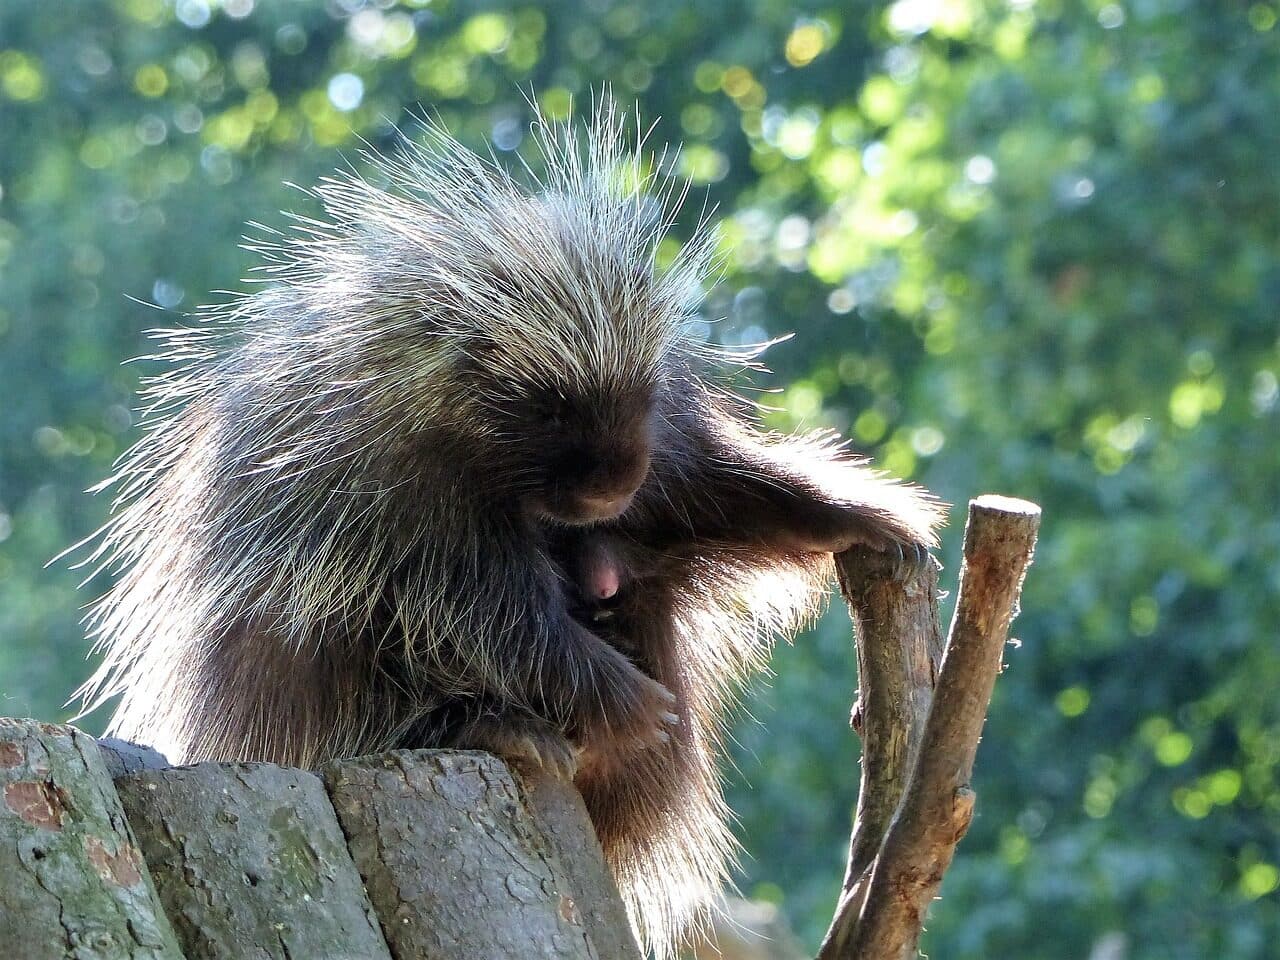 Image: Porcupine sitting on a log